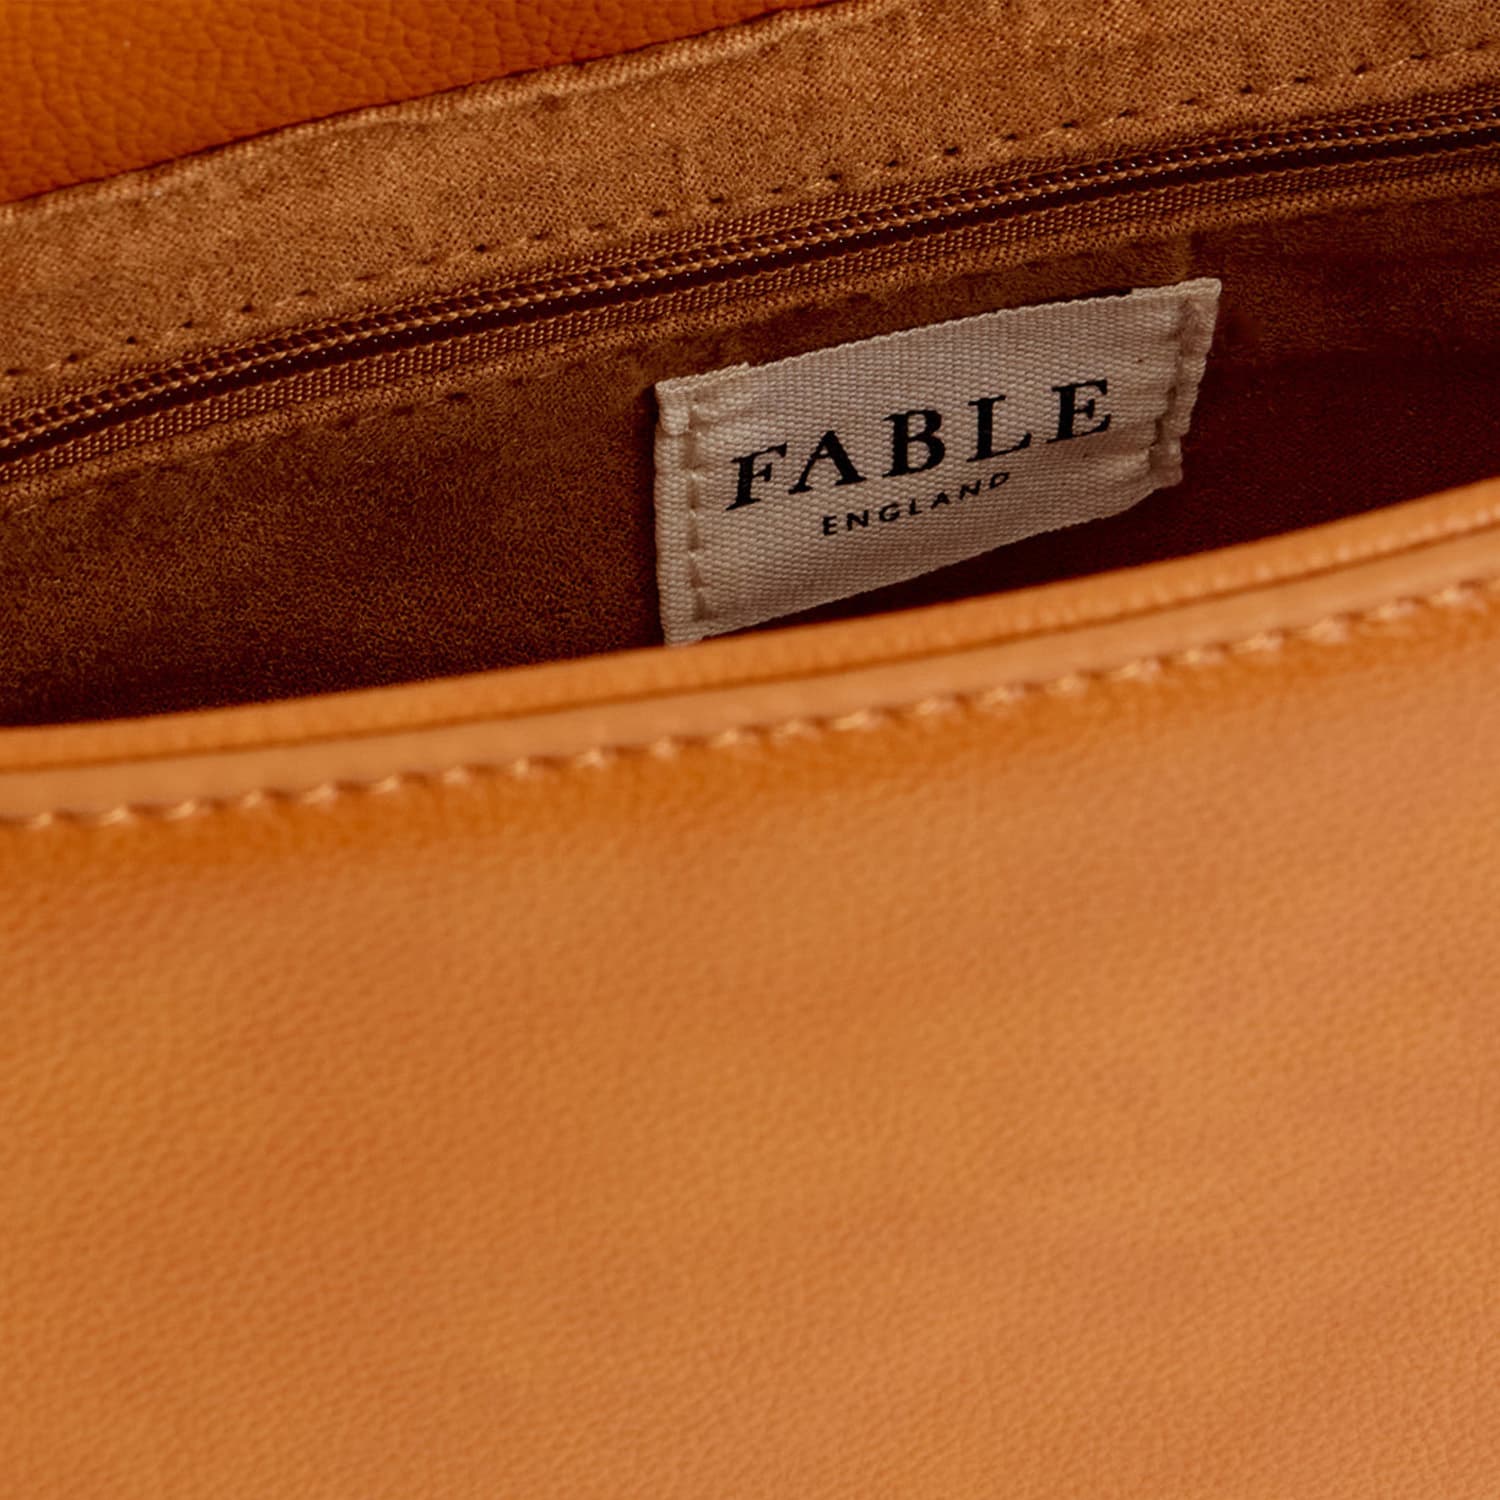 Fable Blue Tit Embroidered Mini Saddle Bag, Fable England